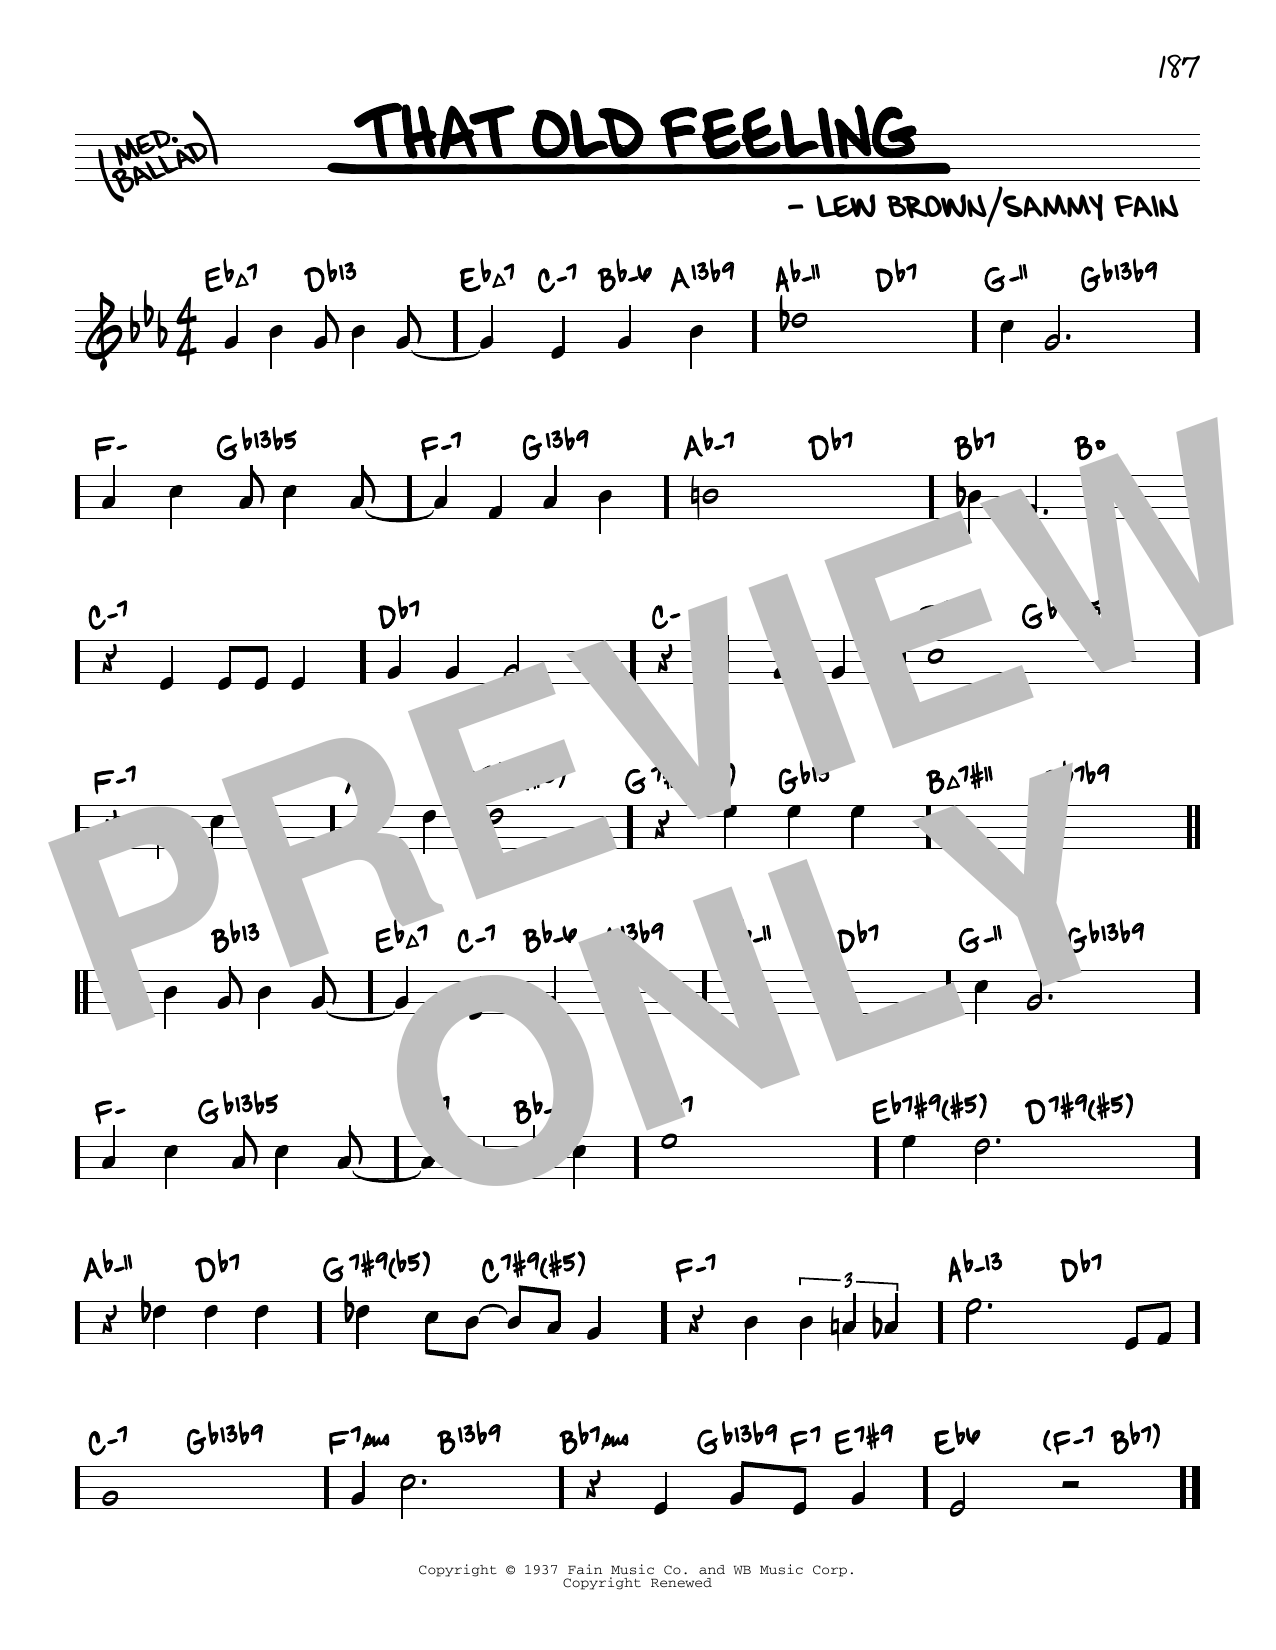 Sammy Fain That Old Feeling (arr. David Hazeltine) Sheet Music Notes & Chords for Real Book – Enhanced Chords - Download or Print PDF